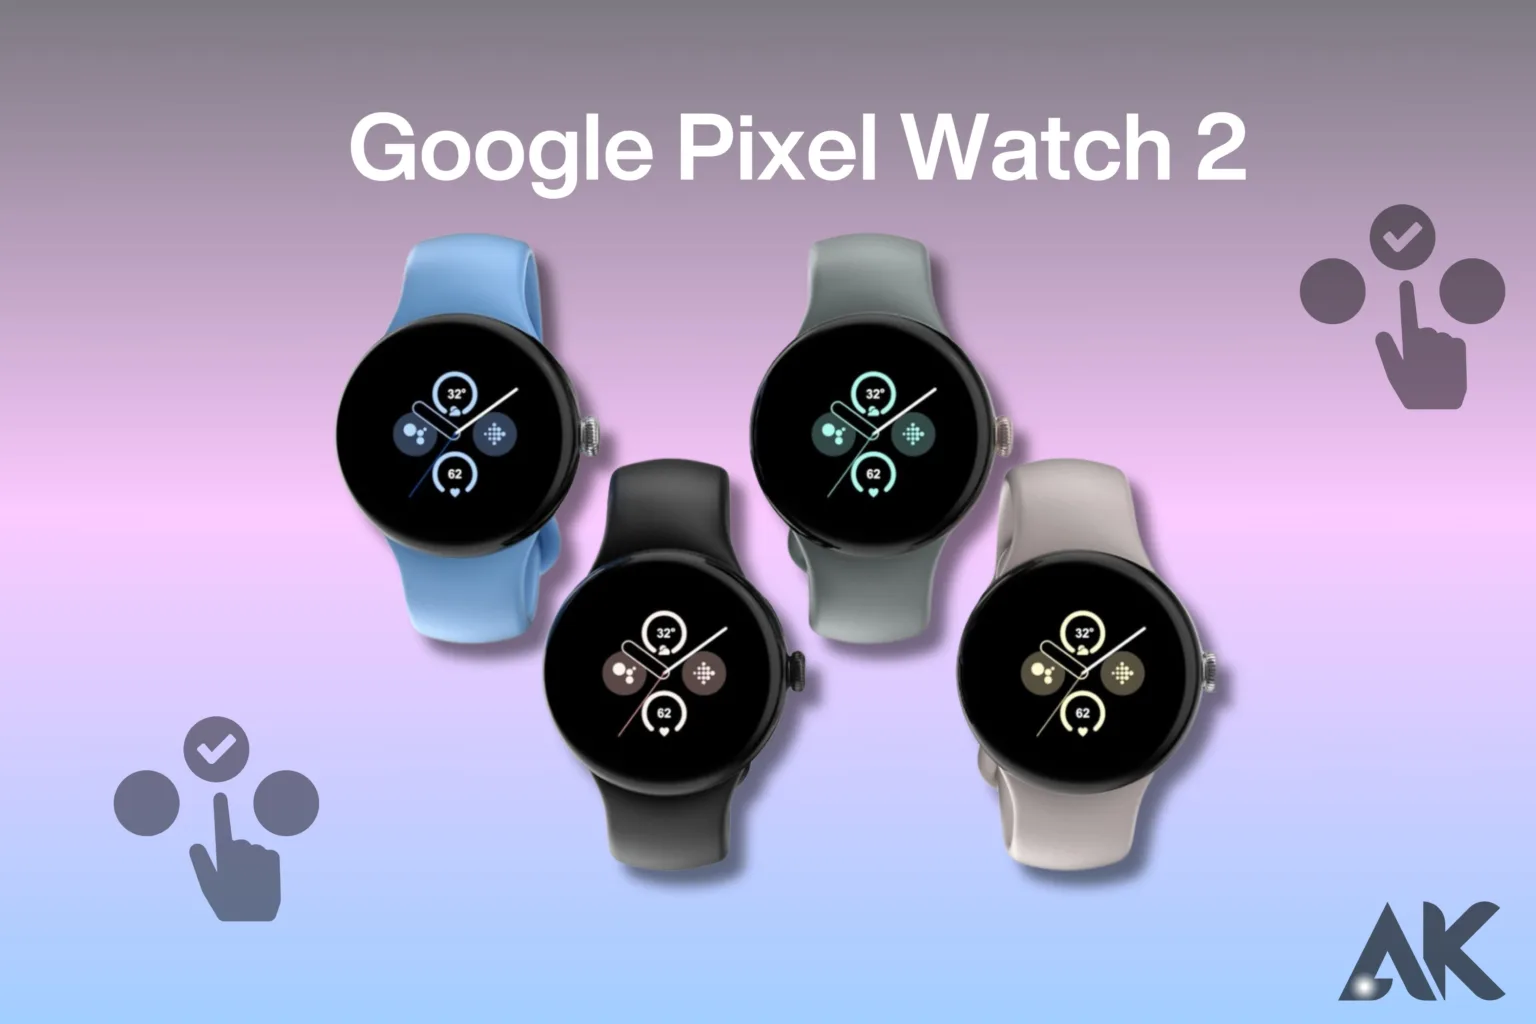 Google Pixel Watch 2 colors